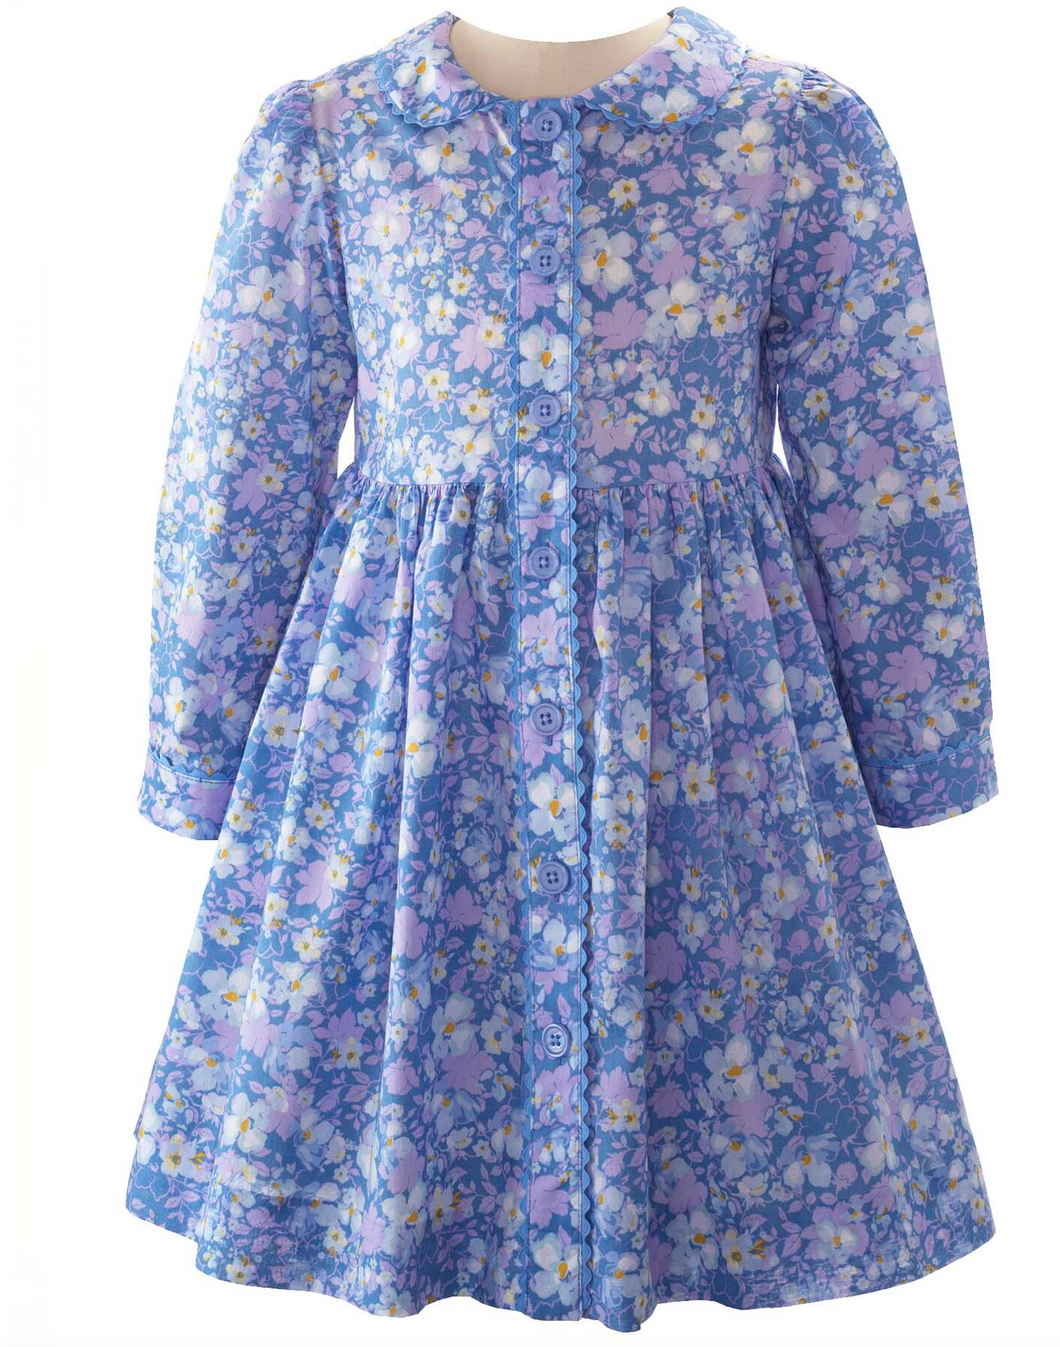 Enchanted Garden Button-front dress